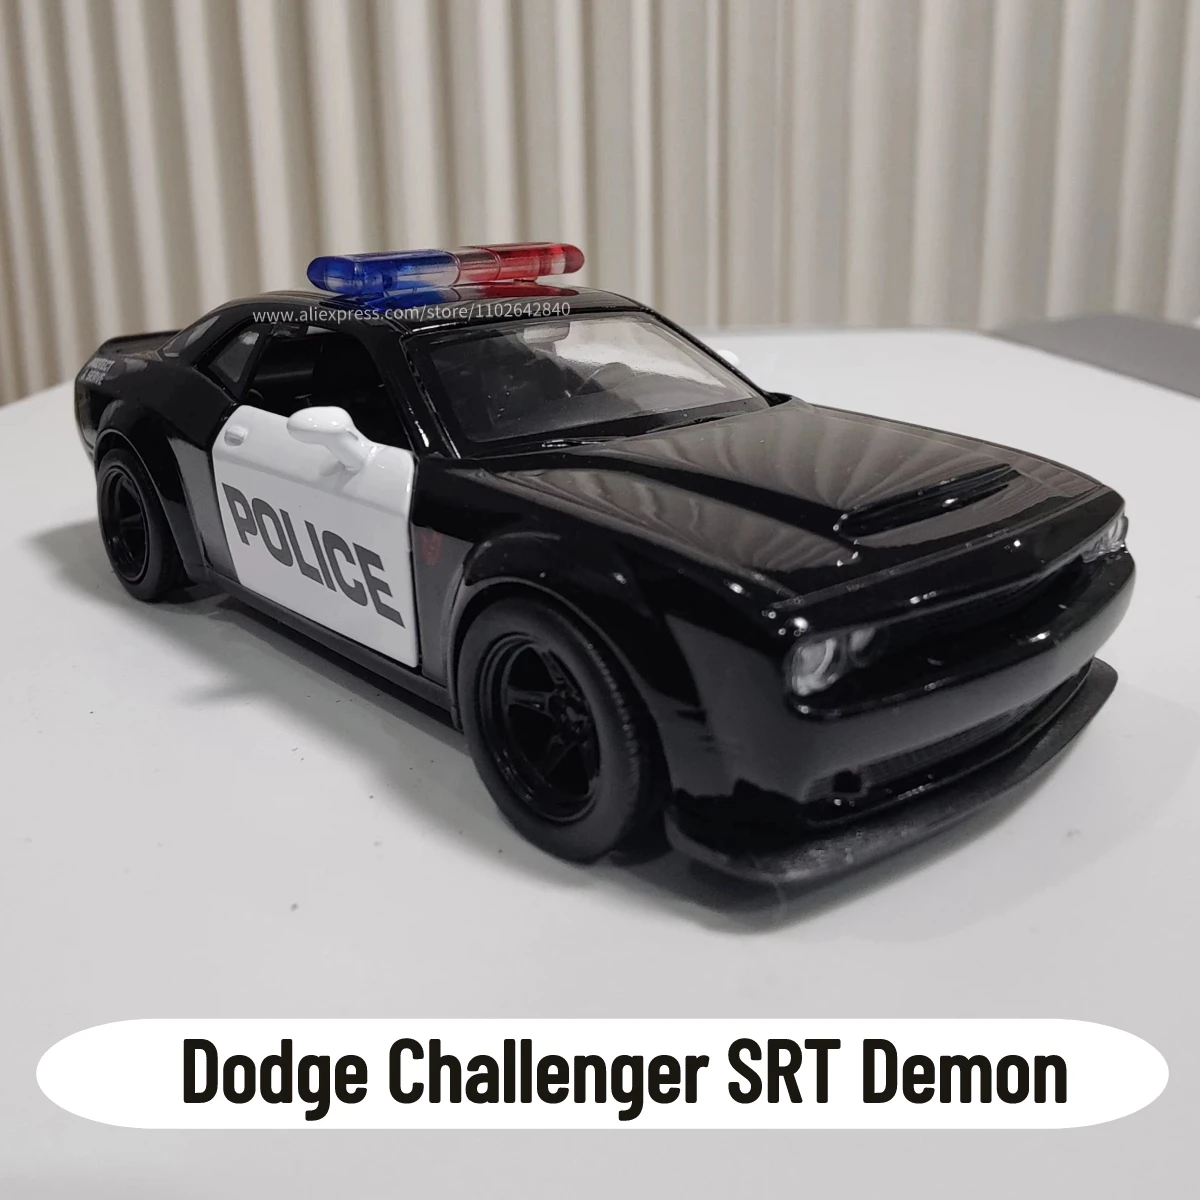 1/36 Scale Car Model Dodge Challenger SRT Demon Replica Diecast Collection Vehicle Interior Decor Ornament Xmas Gift Kid Boy Toy 1 32 scale jada 2011 dodge challenger srt8 diecasts